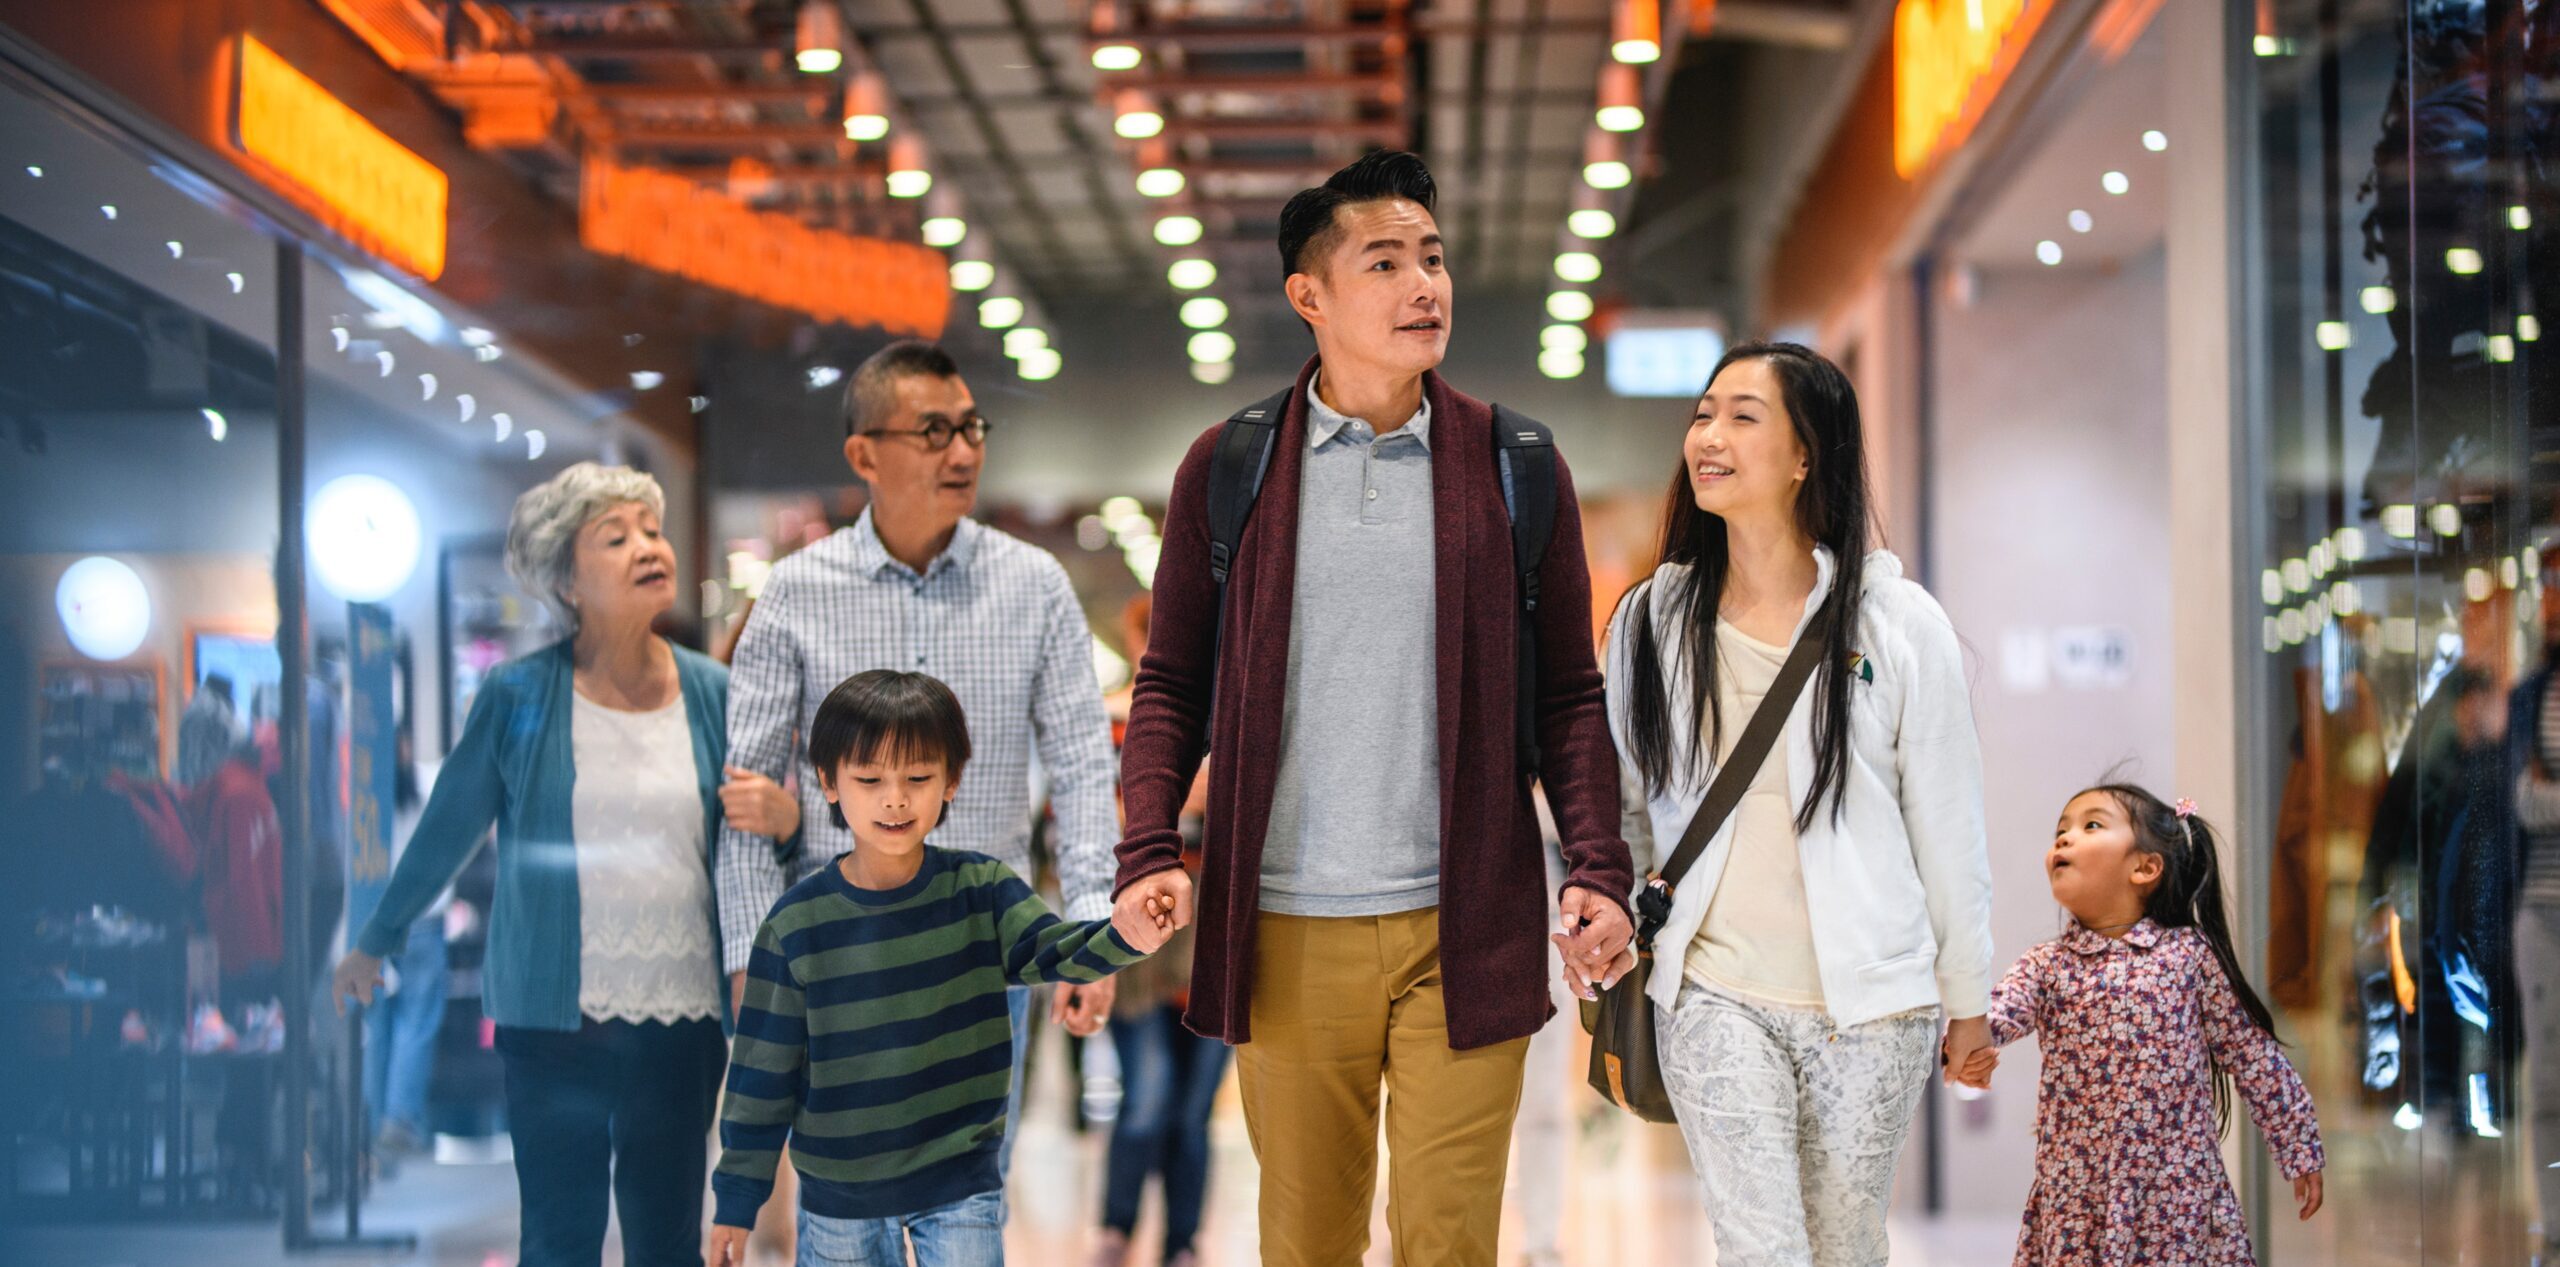 A family walking through a shopping mall